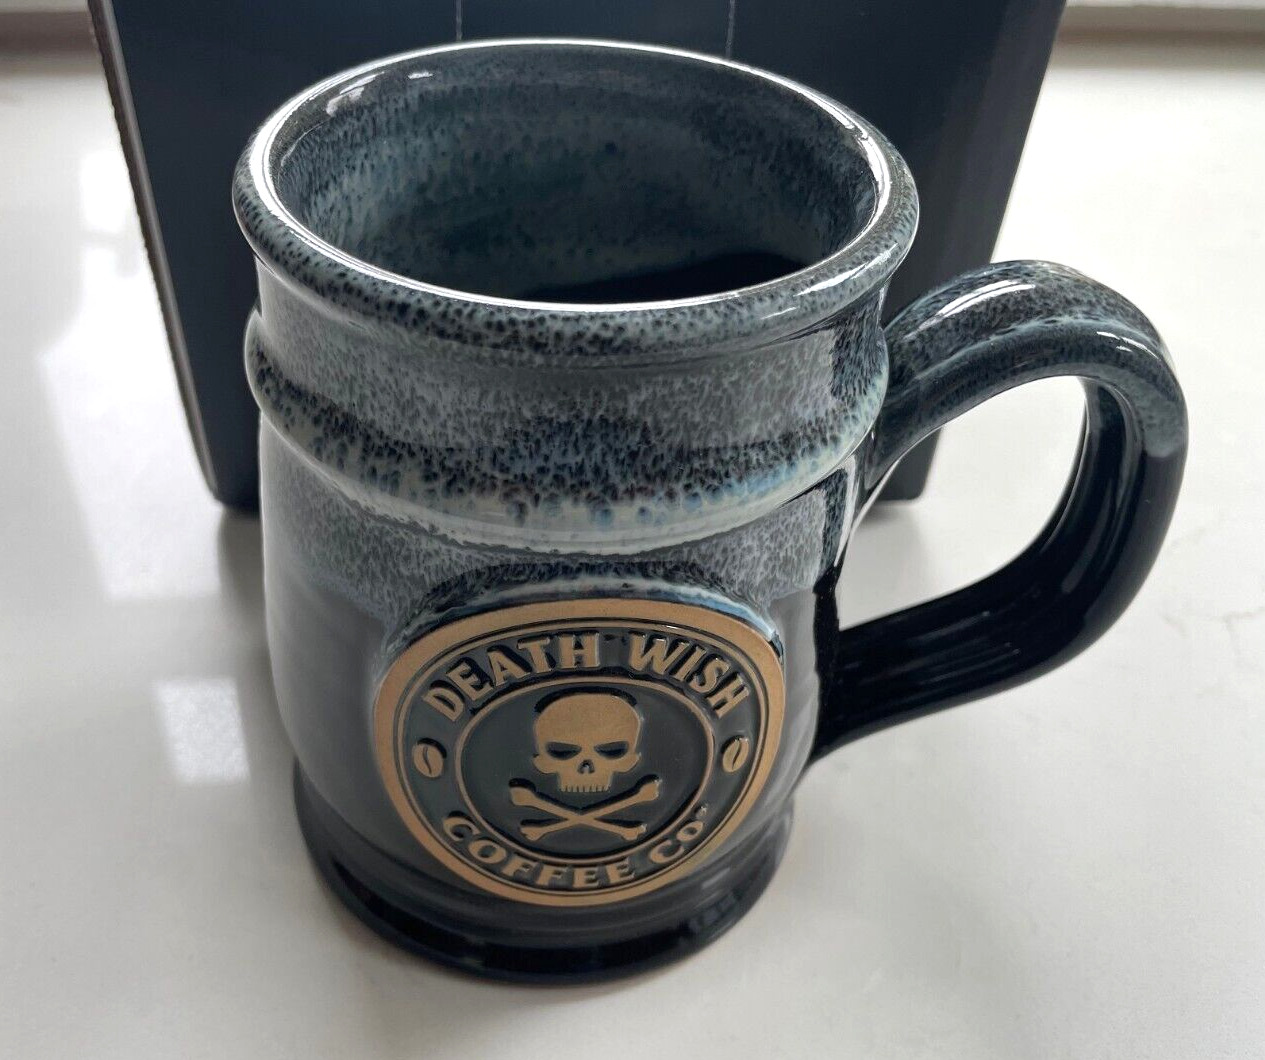 Death Wish Coffee Deneen Pottery Tankard Mug Elements Water LE 191/1000 New